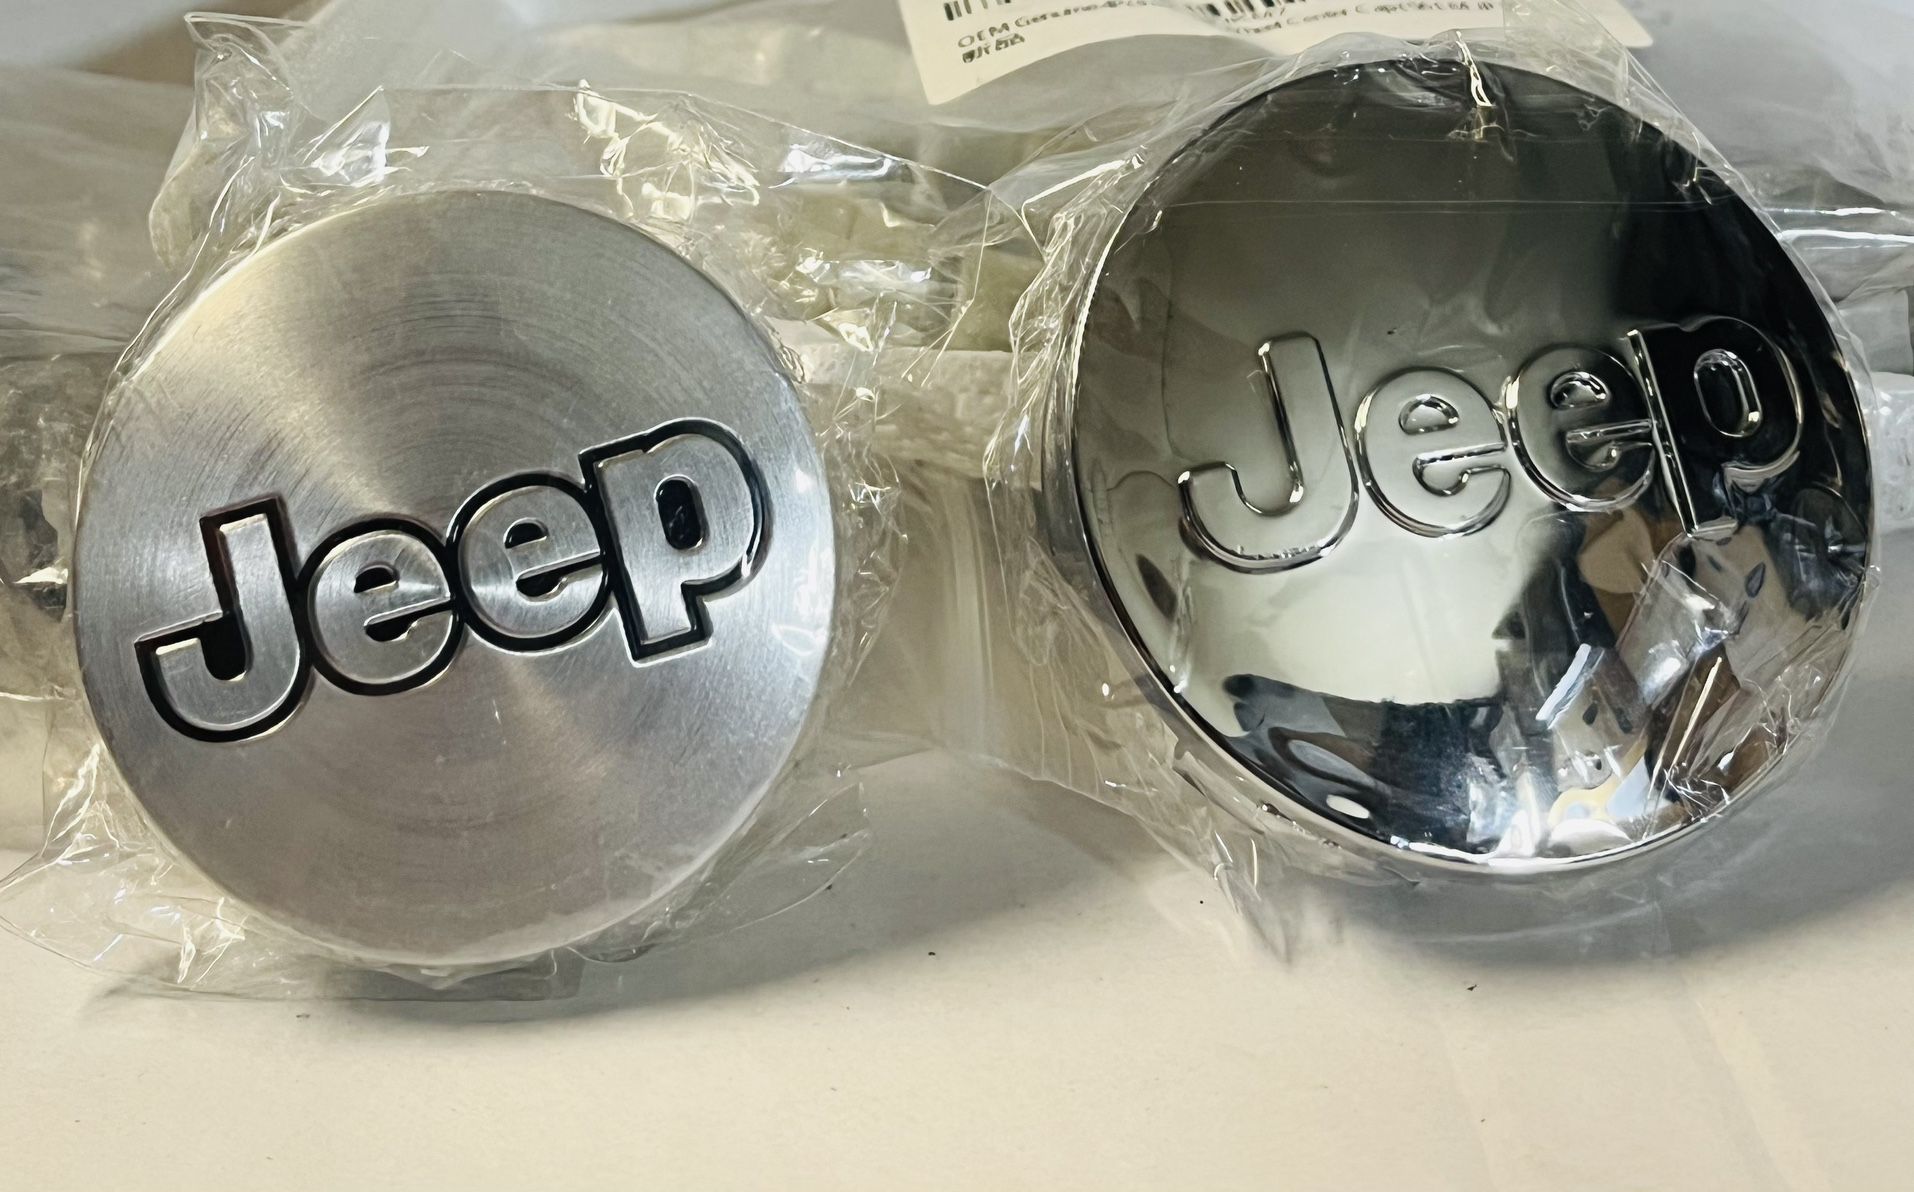 Jeep Wheel Center Caps Sets New (4)